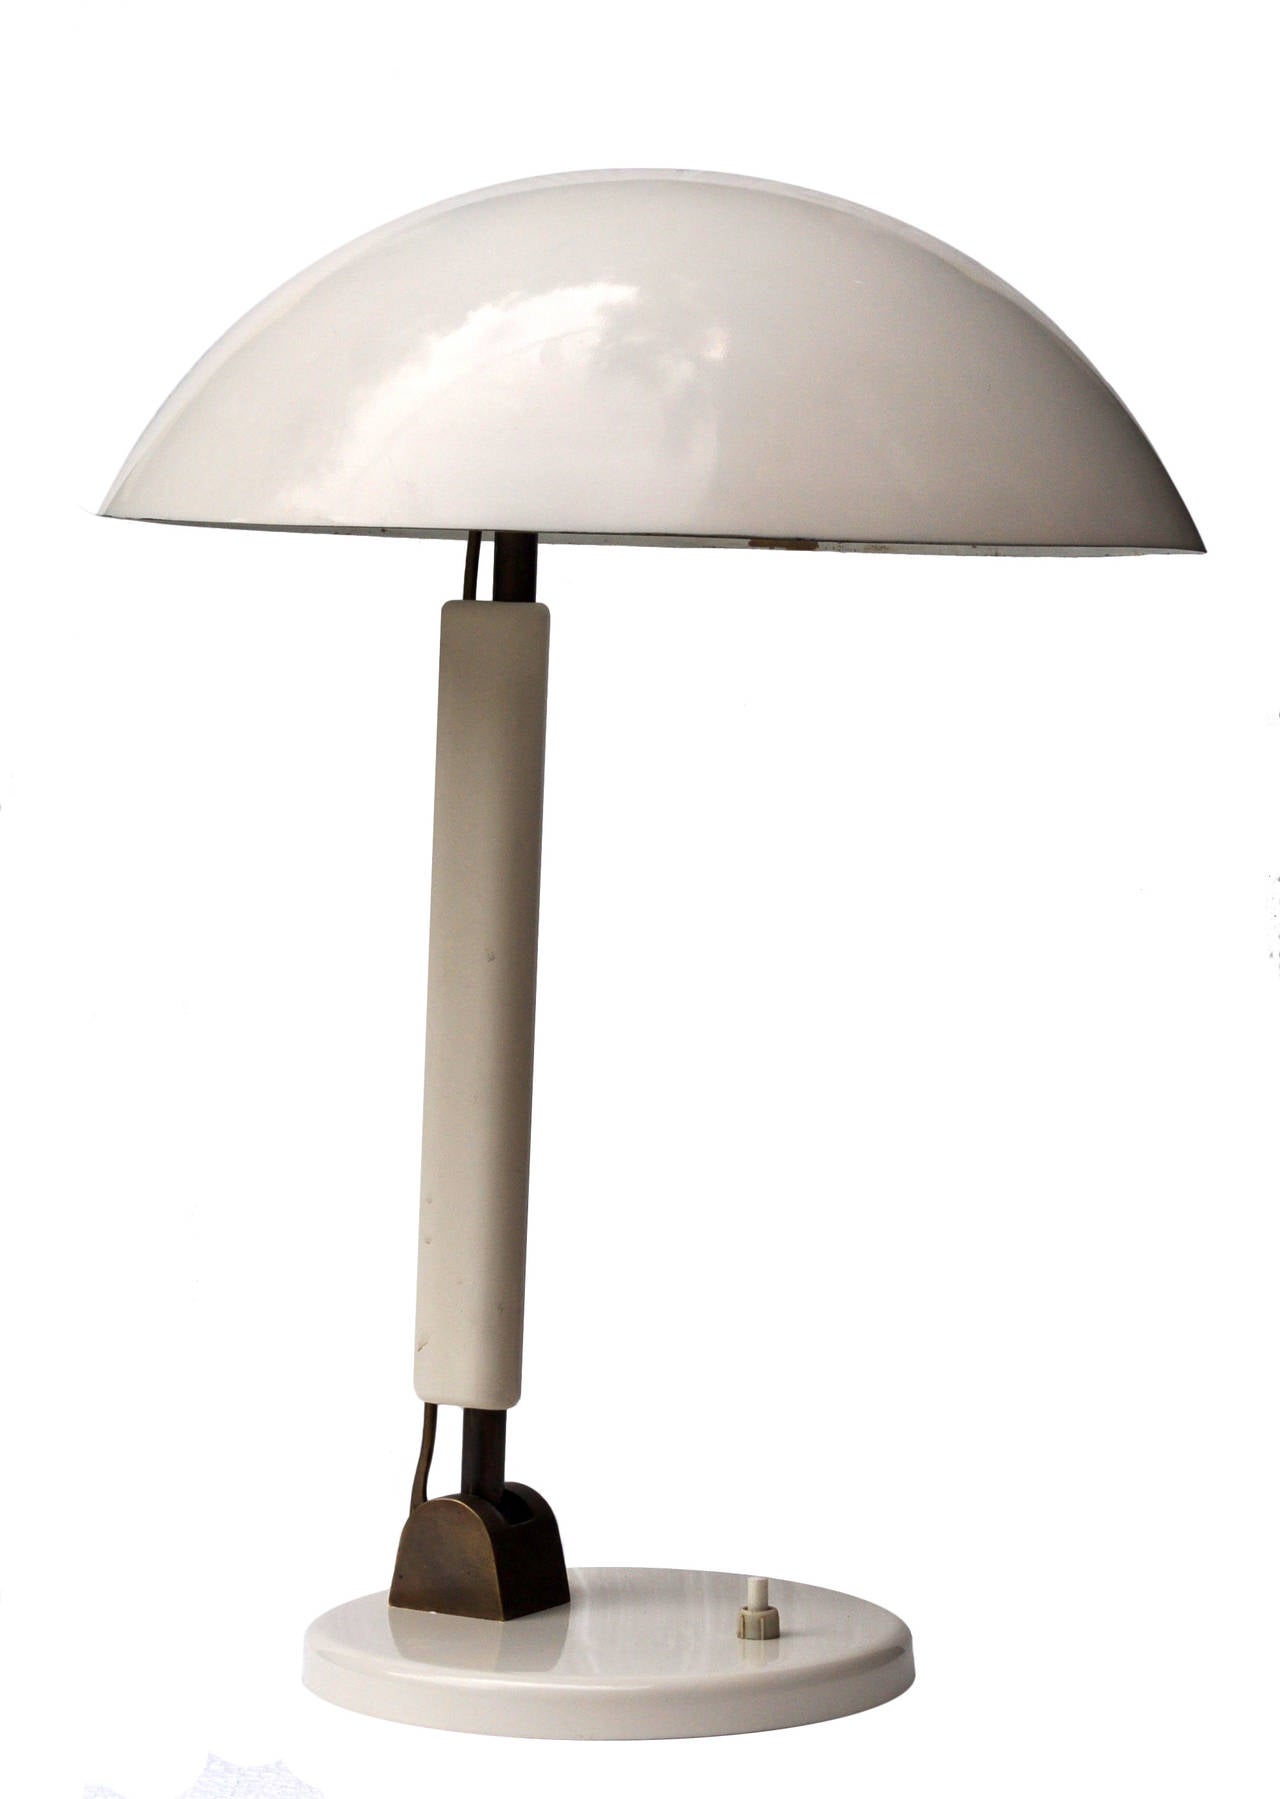 Industrial Modernist Desk Lamp, Switzerland, 1950s For Sale